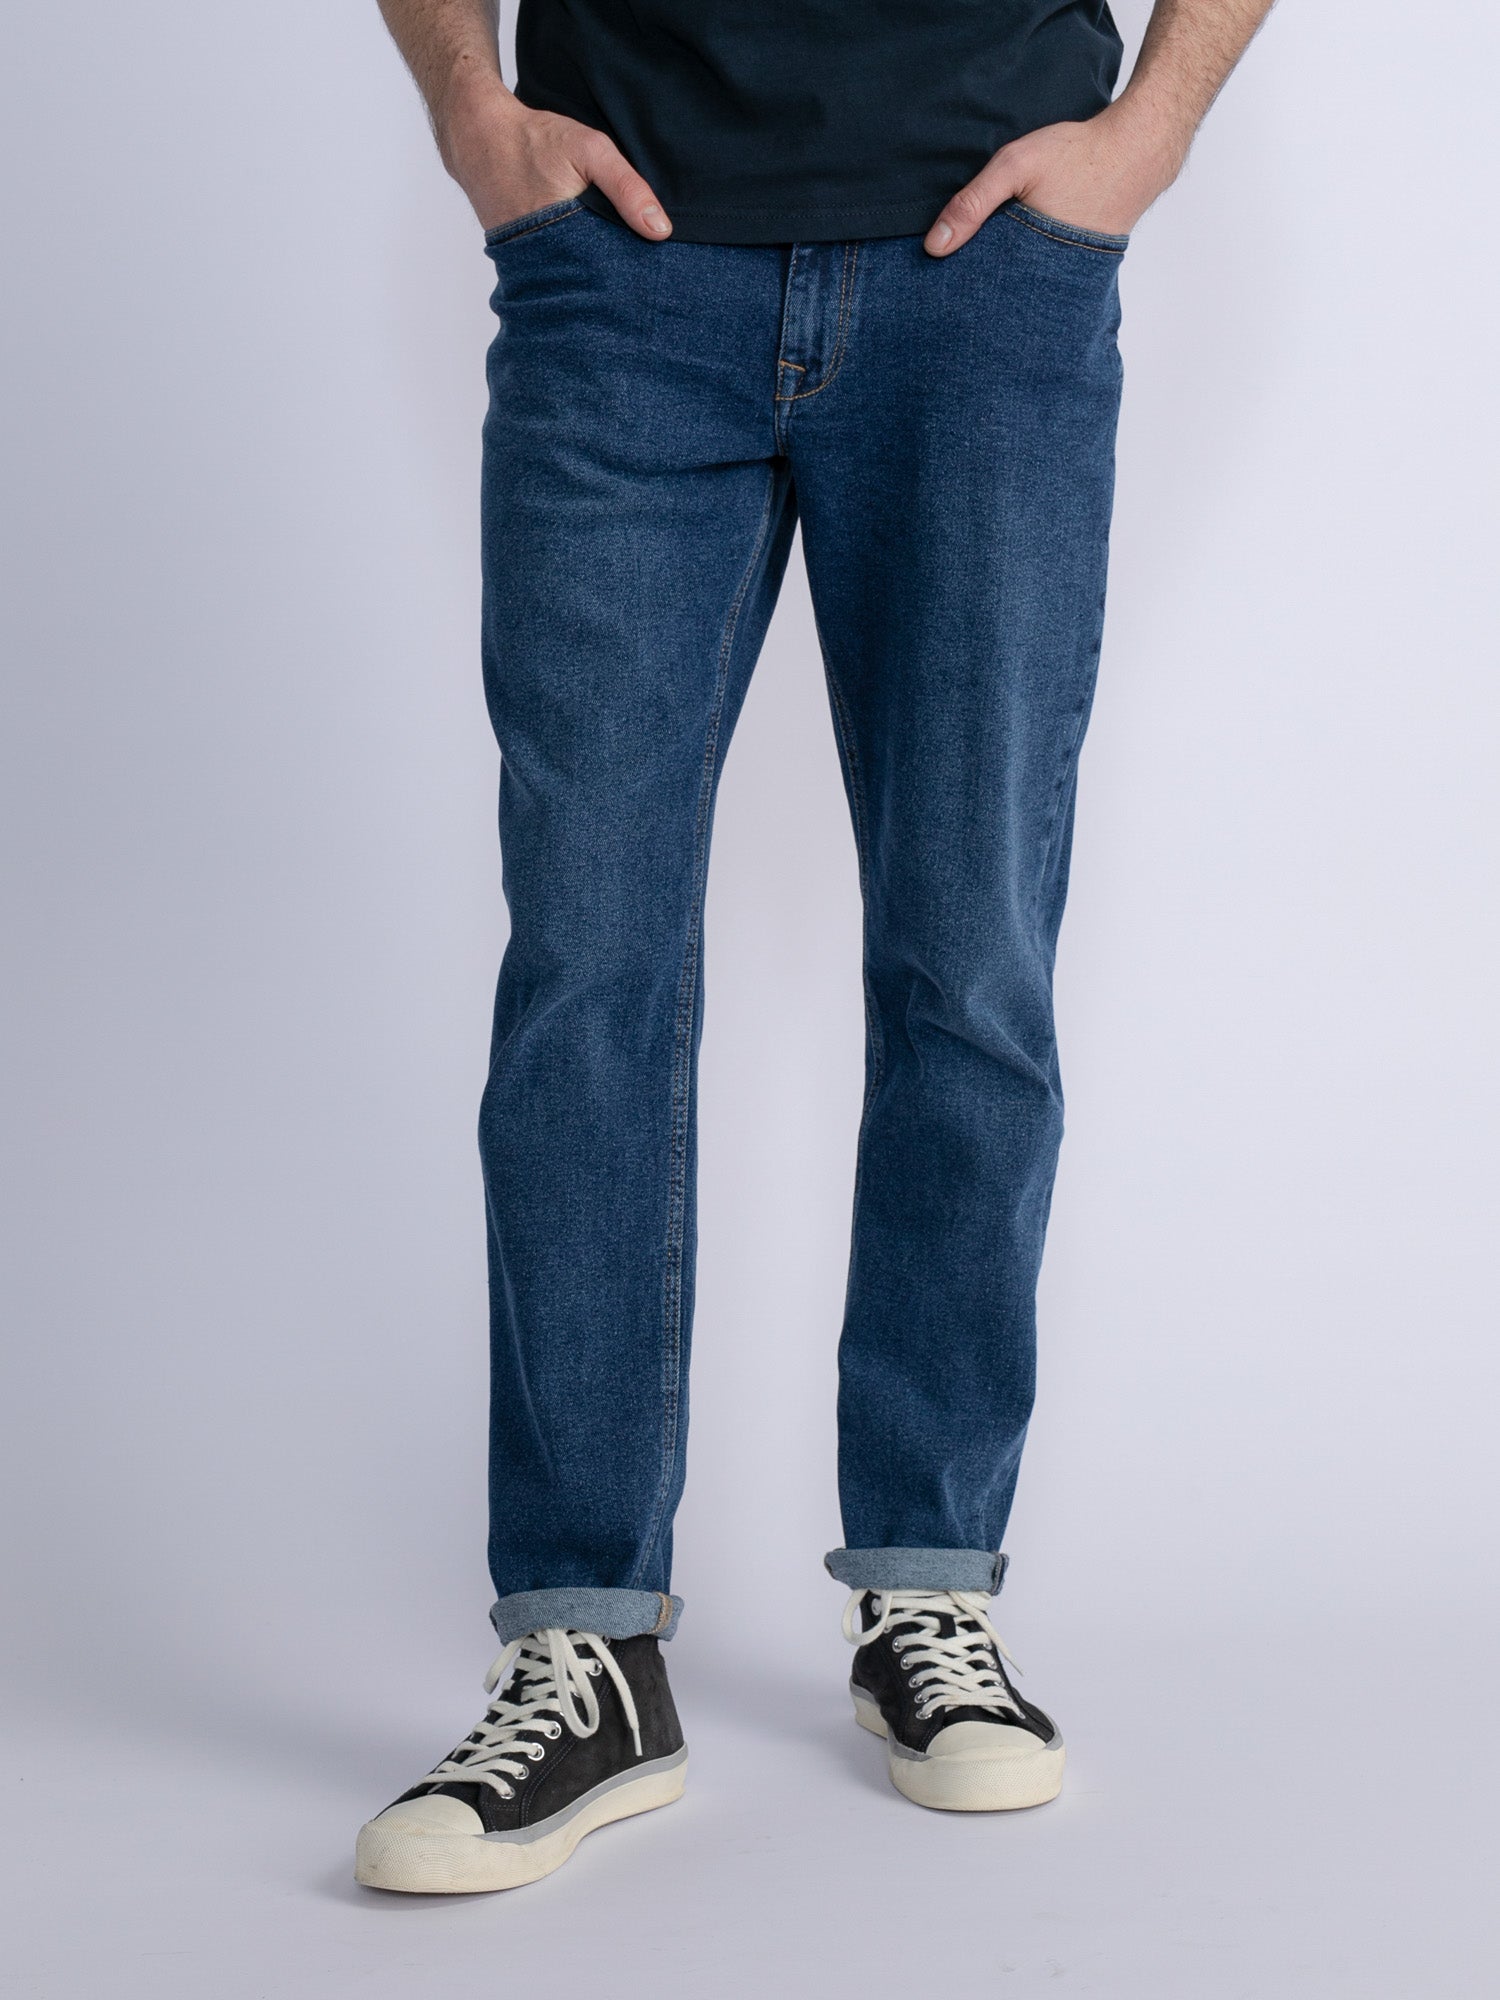 Chaqueta Hombre Ref: P13 003 - Petrolizado Jeans